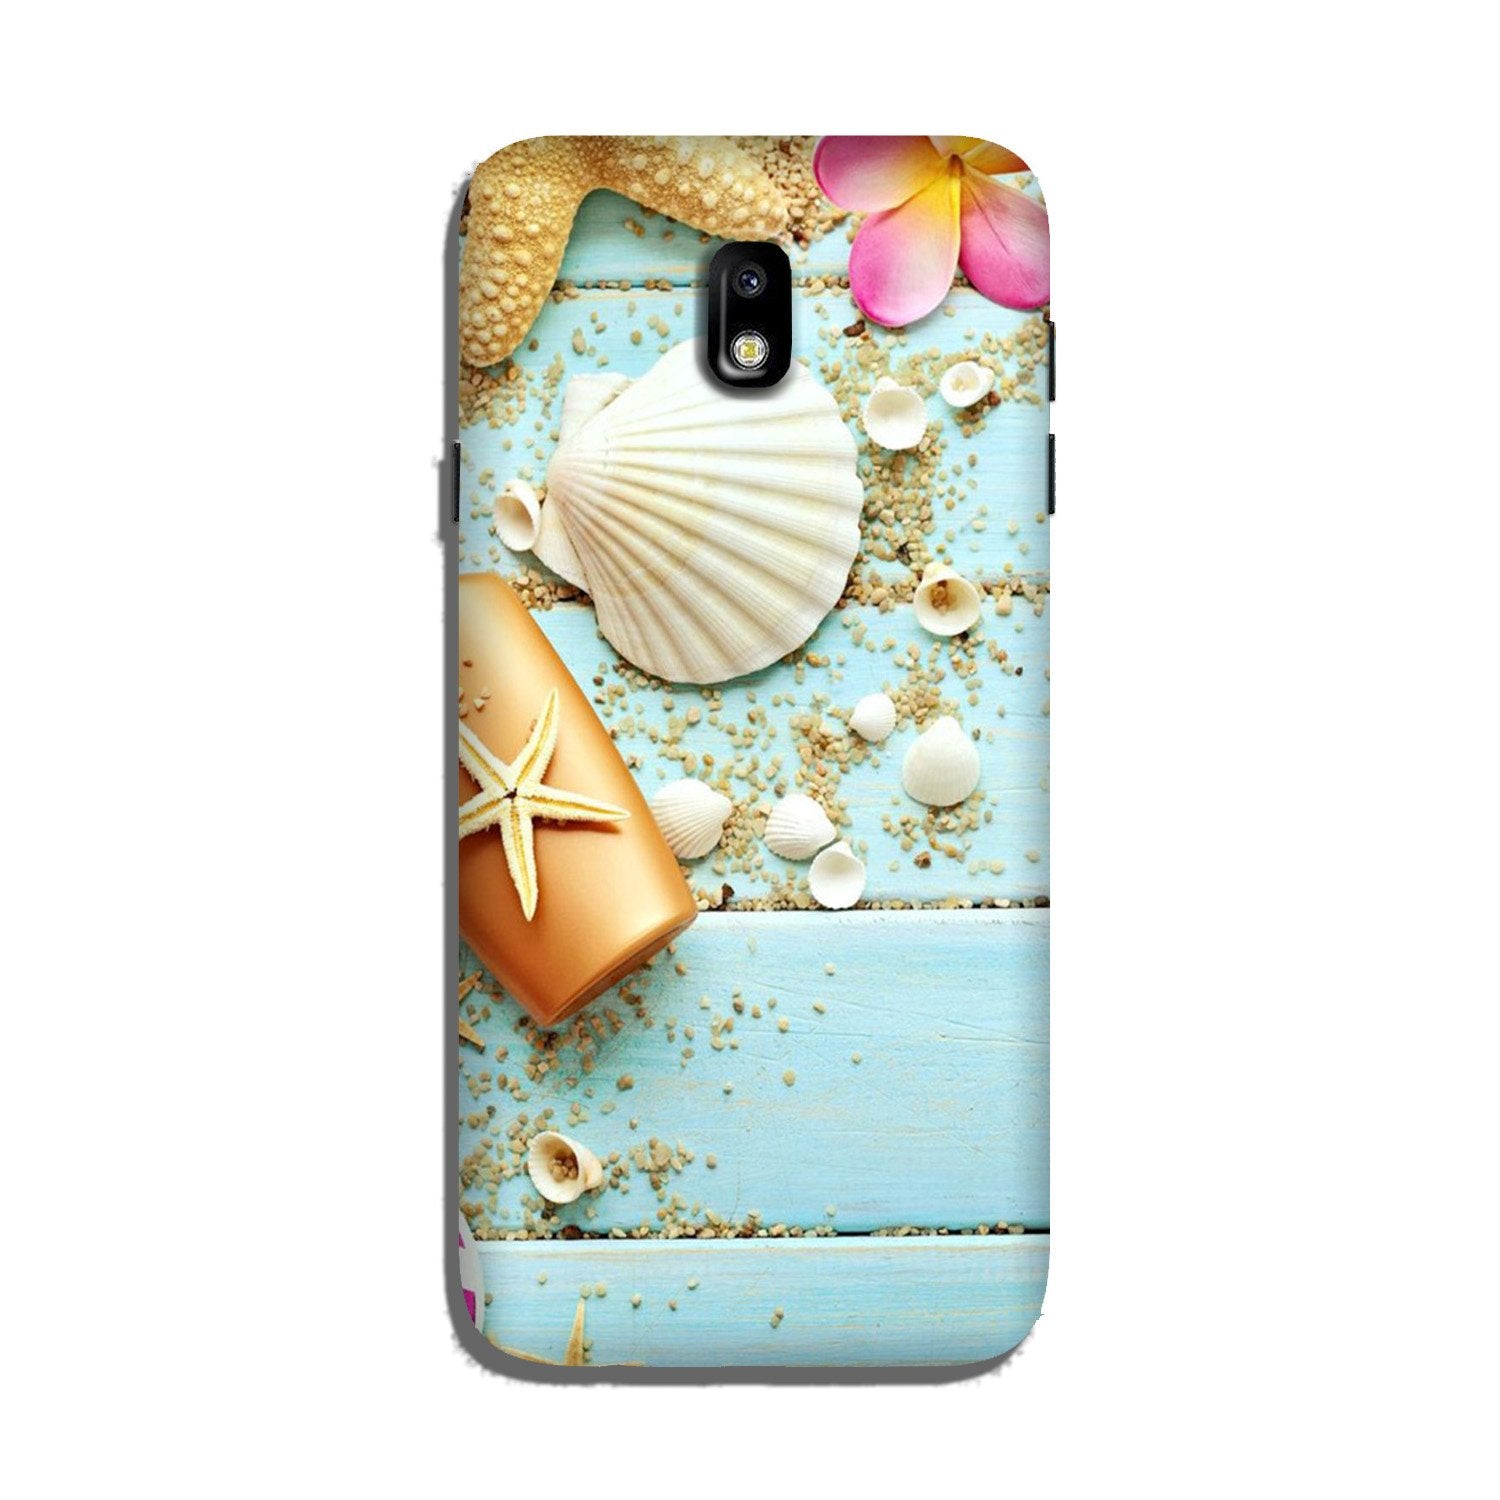 Sea Shells Case for Galaxy J3 Pro